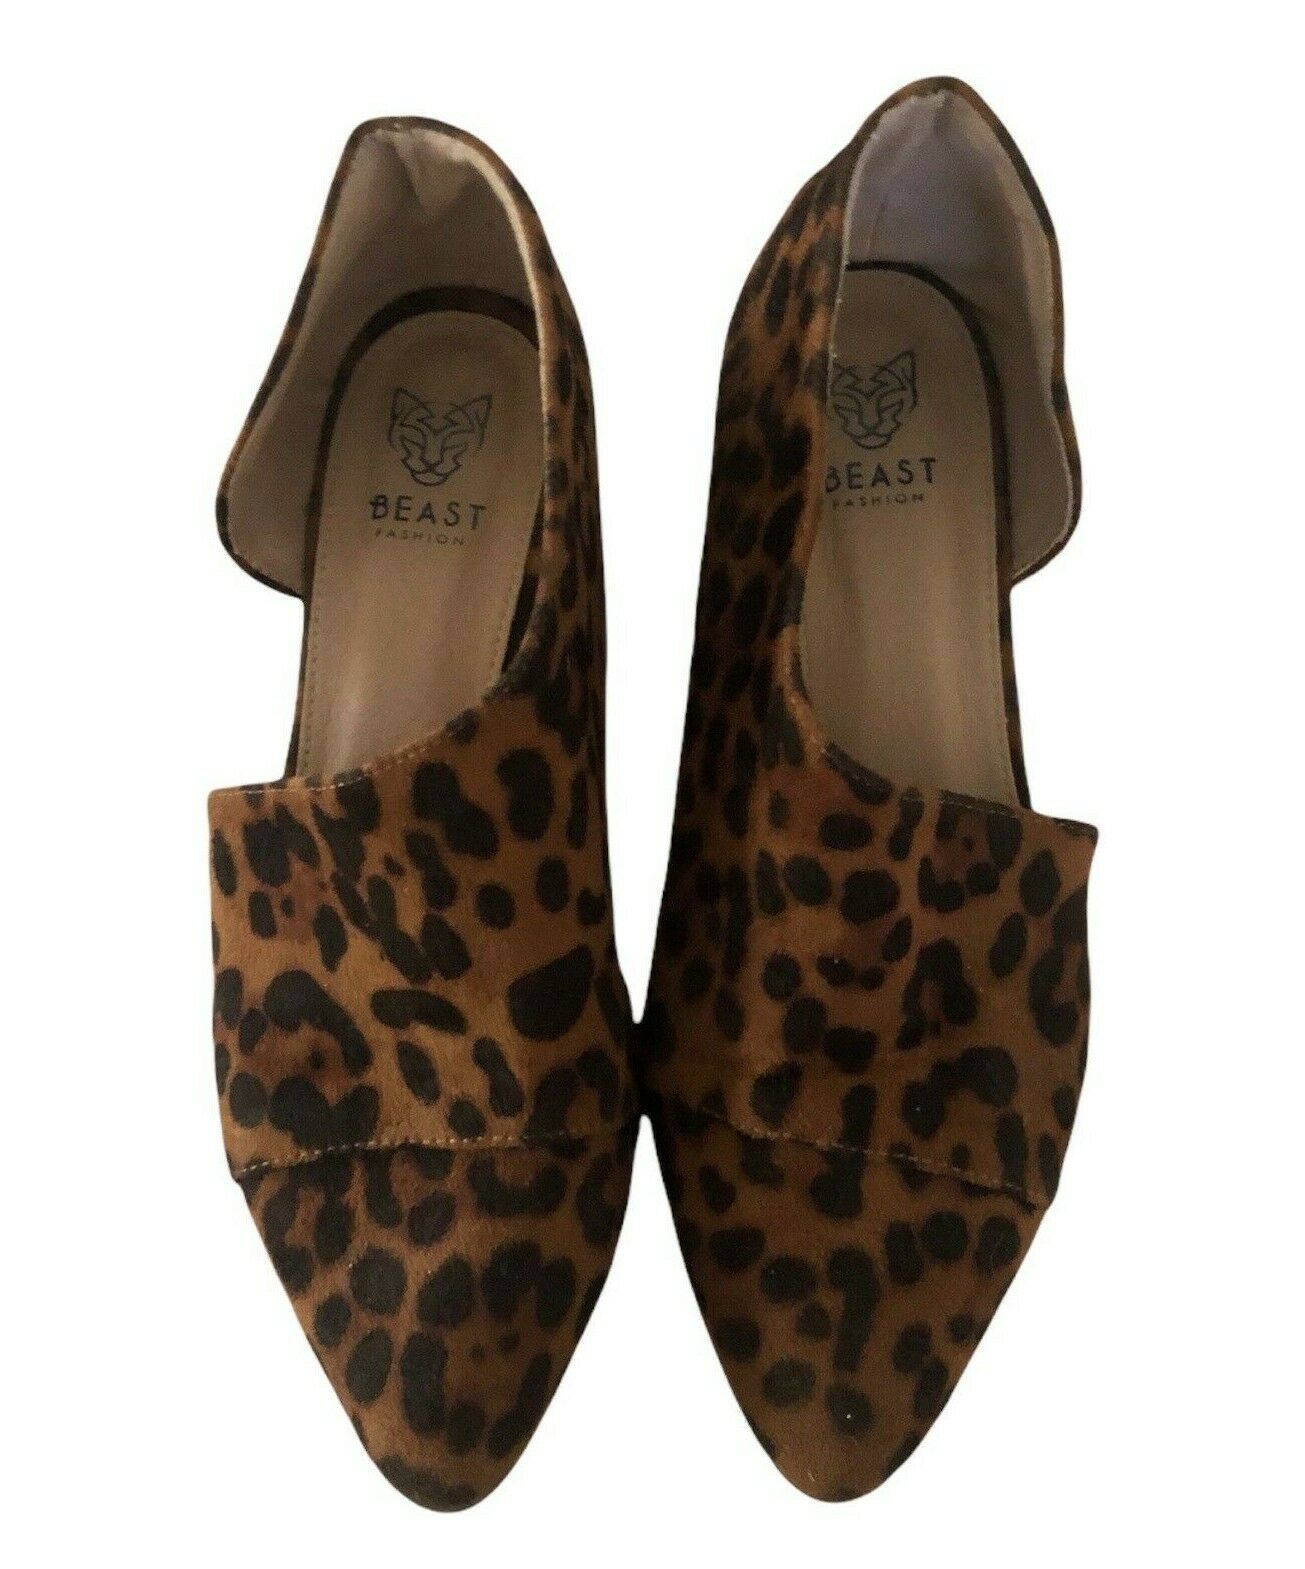 Beast Fashion Women's Leopard Print Slip on Shoes Size 9